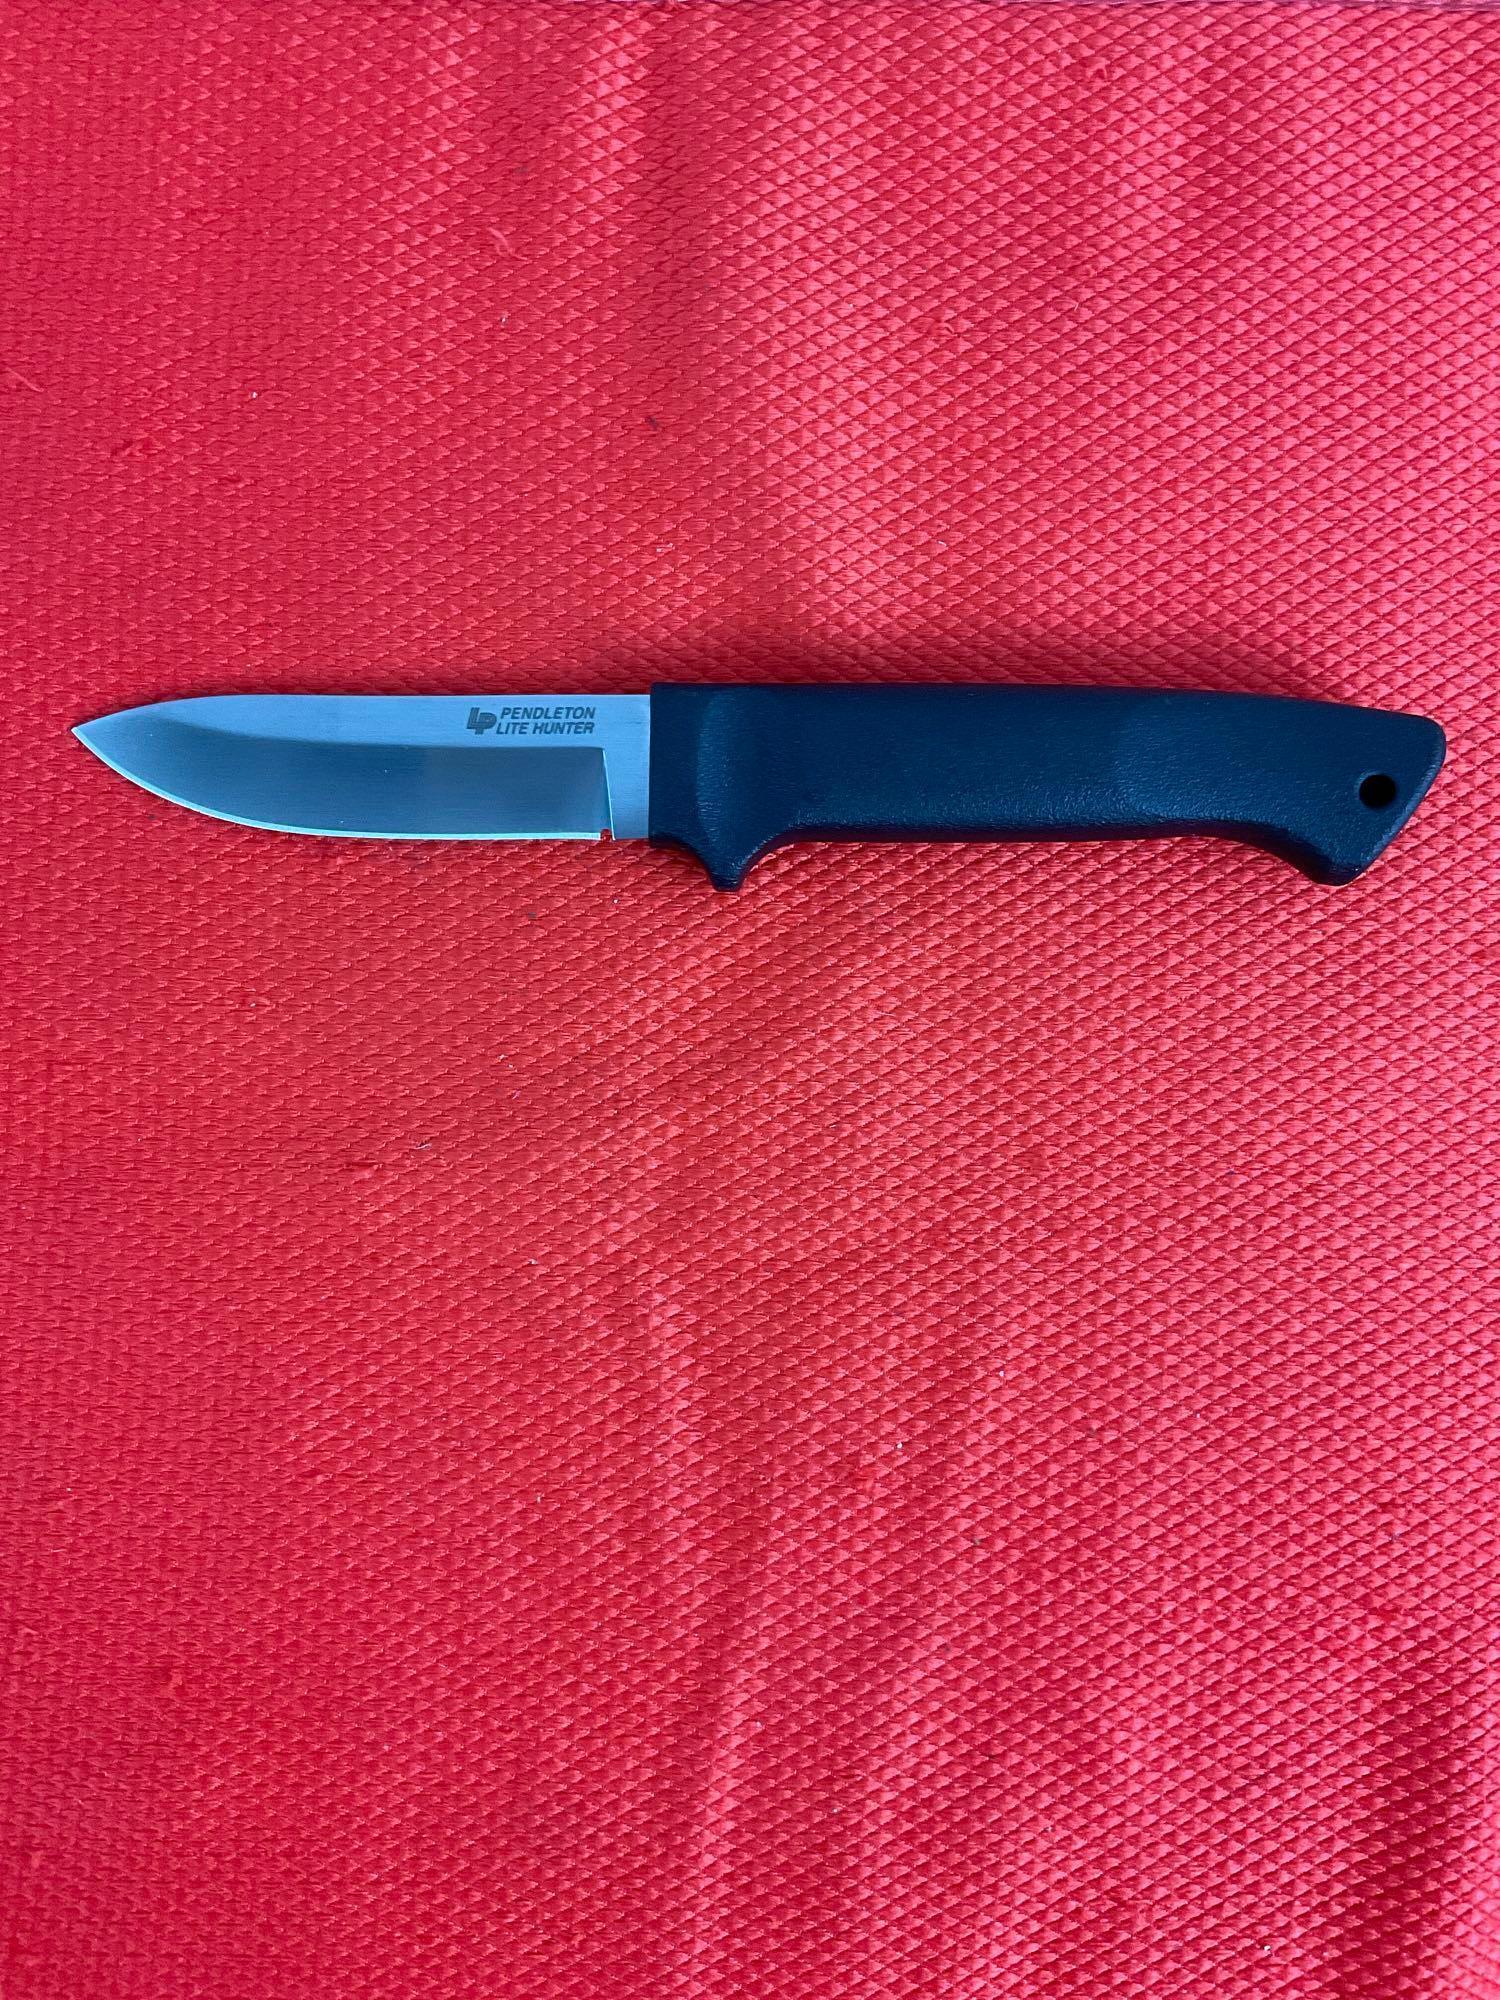 Cold Steel 3.5" Stainless Steel Fixed Blade Pendleton Lite Hunter Knife w/ Sheath No. 20SPH. LNIB.